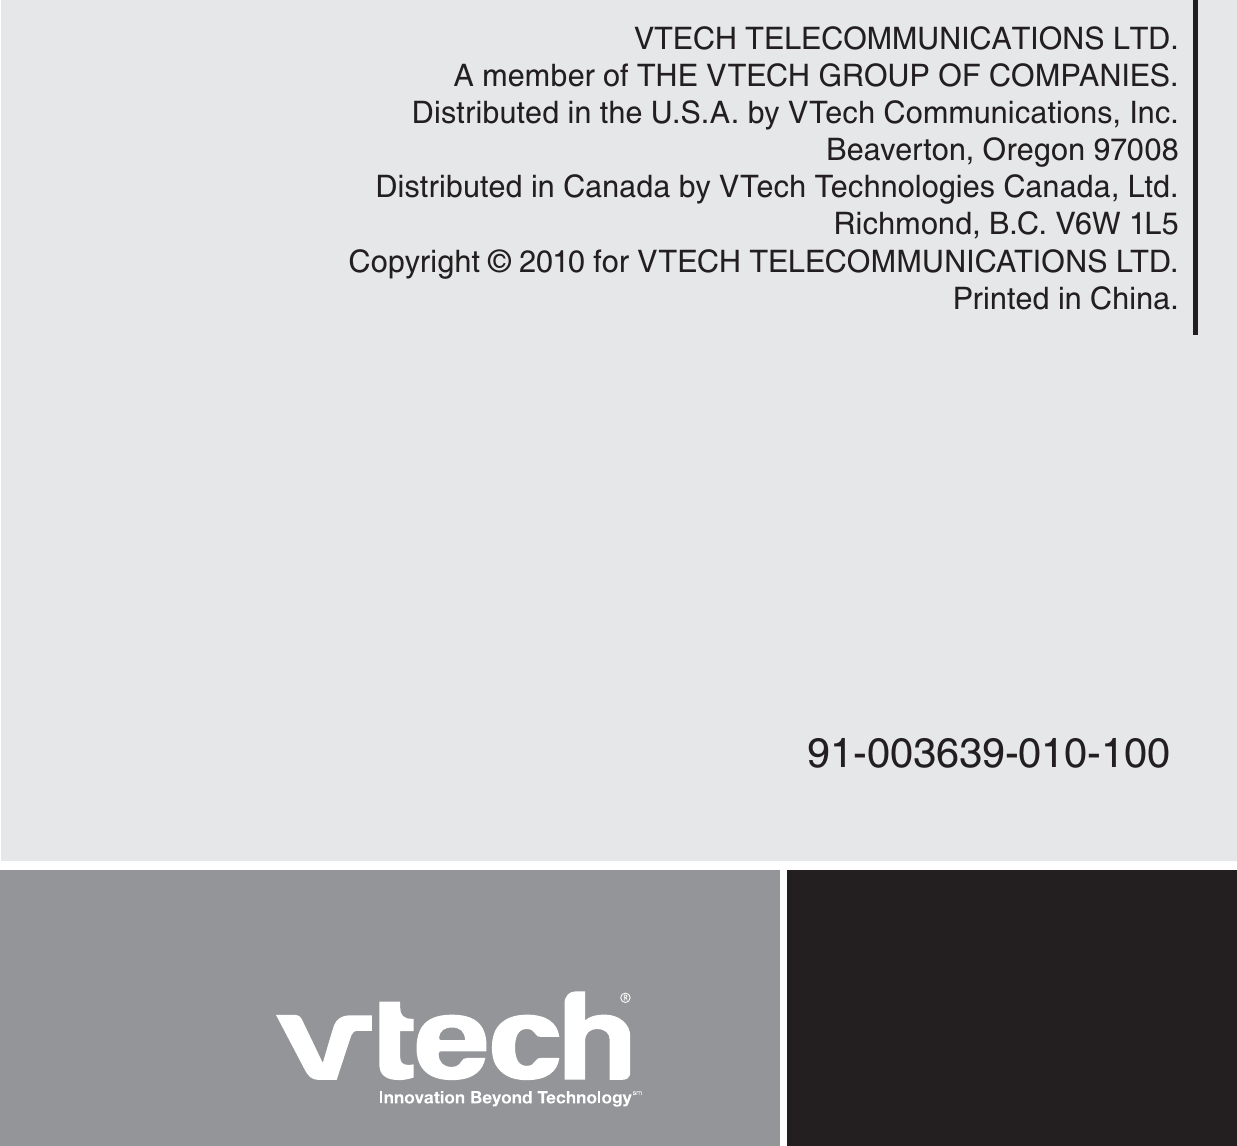 VTECH TELECOMMUNICATIONS LTD.A member of THE VTECH GROUP OF COMPANIES.Distributed in the U.S.A. by VTech Communications, Inc.Beaverton, Oregon 97008Distributed in Canada by VTech Technologies Canada, Ltd.Richmond, B.C. V6W 1L5Copyright © 2010 for VTECH TELECOMMUNICATIONS LTD.Printed in China.91-003639-010-100